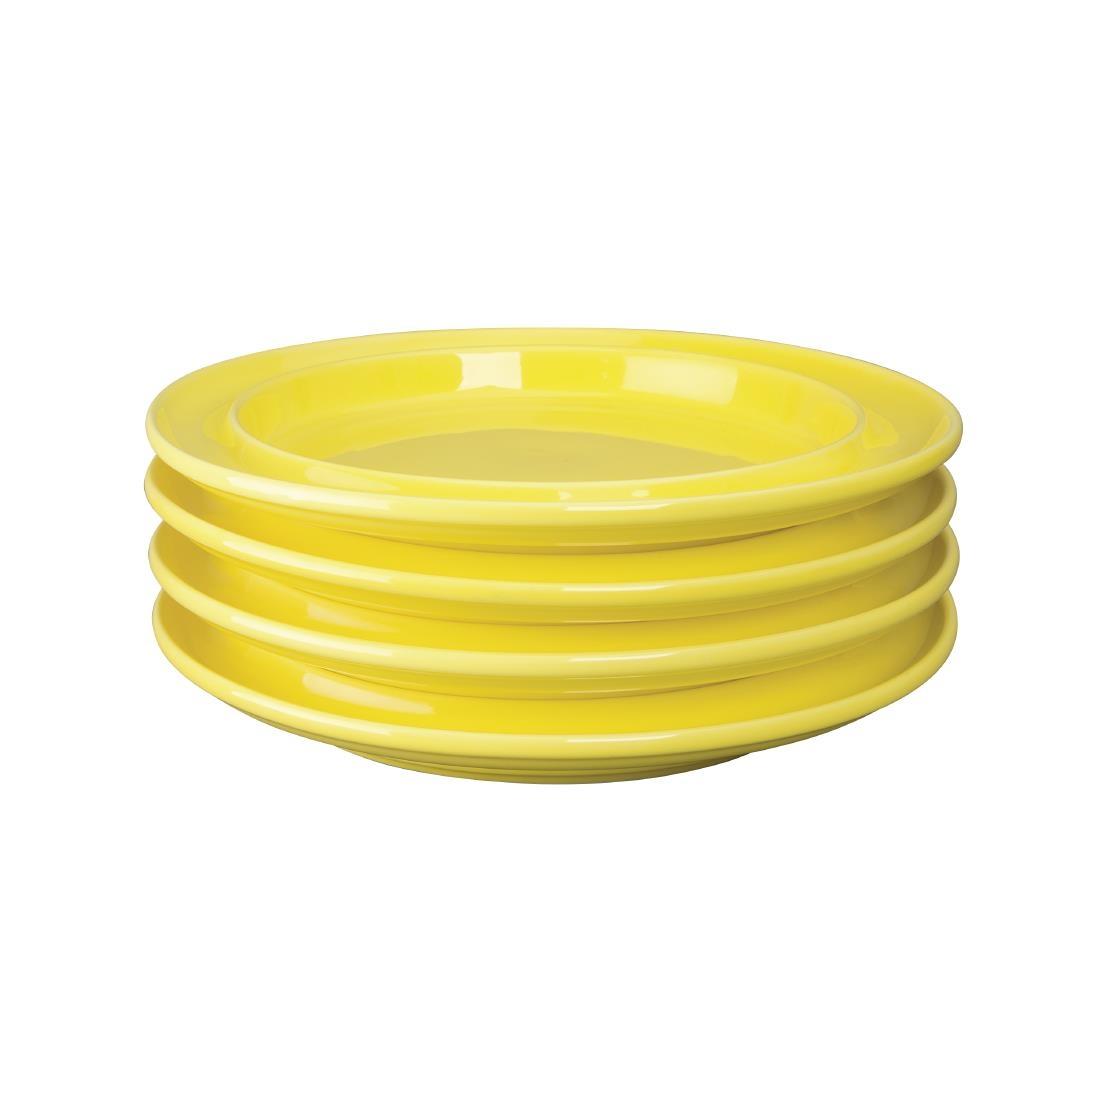 Olympia Kristallon Heritage Raised Rim Plates Yellow 252mm (Pack of 4) - DW707  - 6